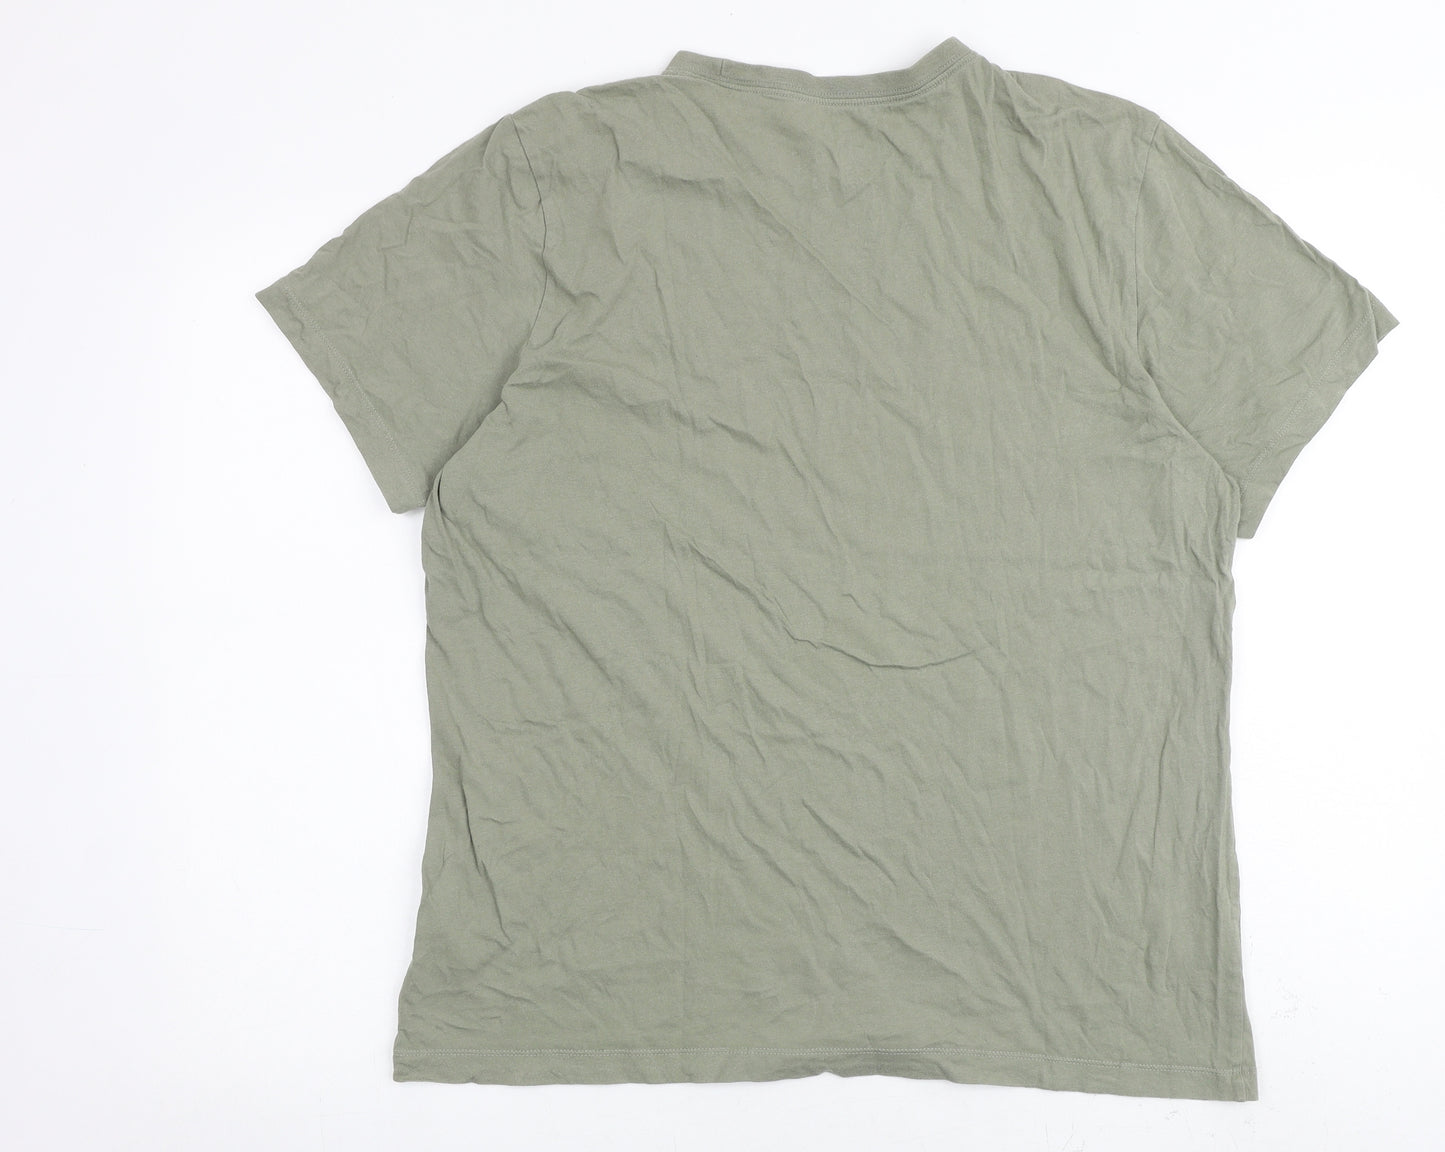 Nike Mens Green Cotton T-Shirt Size L Crew Neck